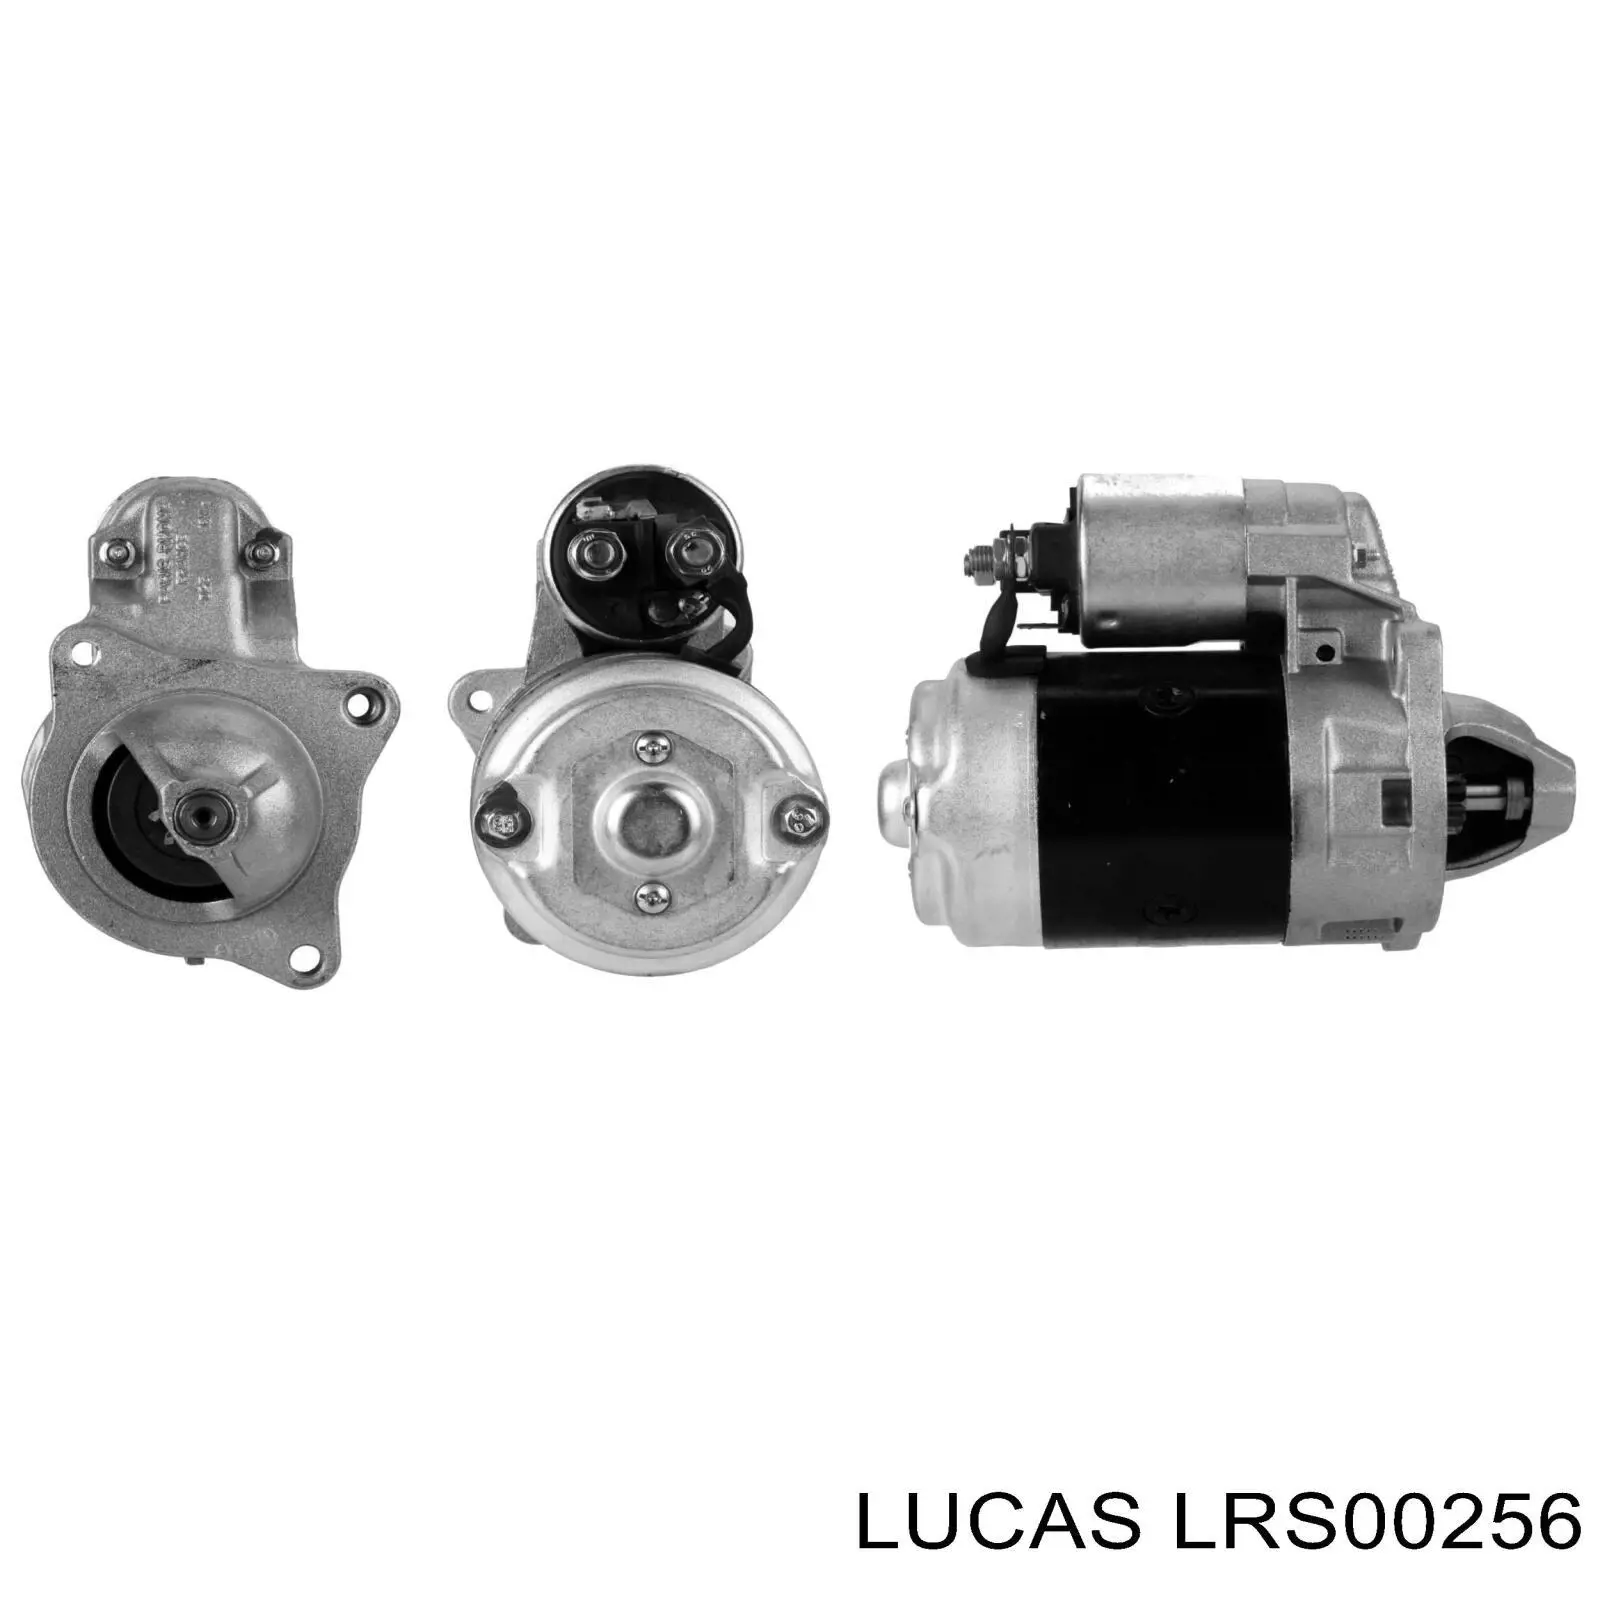 LRS00256 Lucas motor de arranque